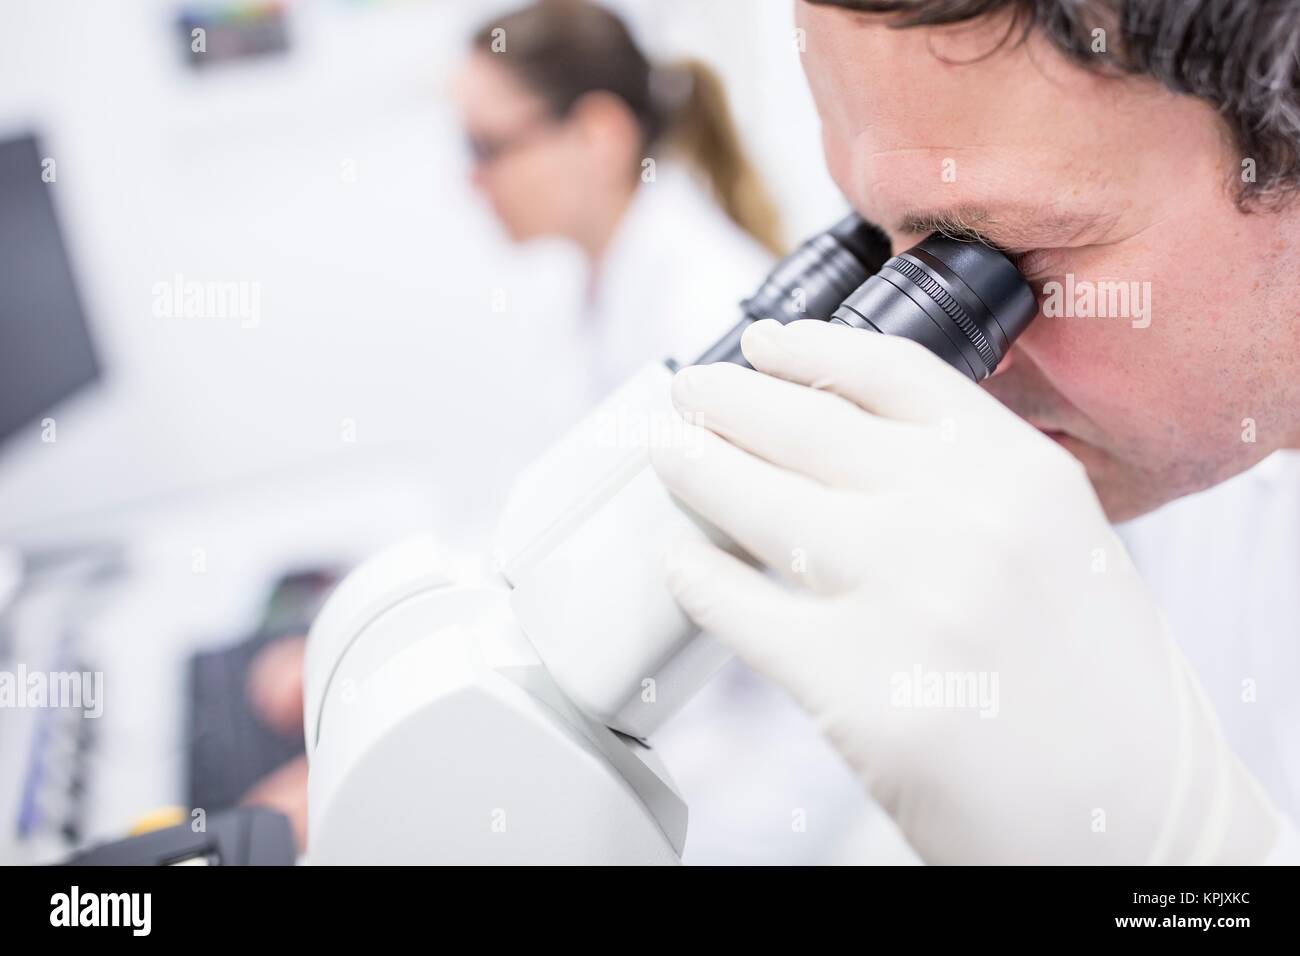 Male scientist using microscope. Stock Photo